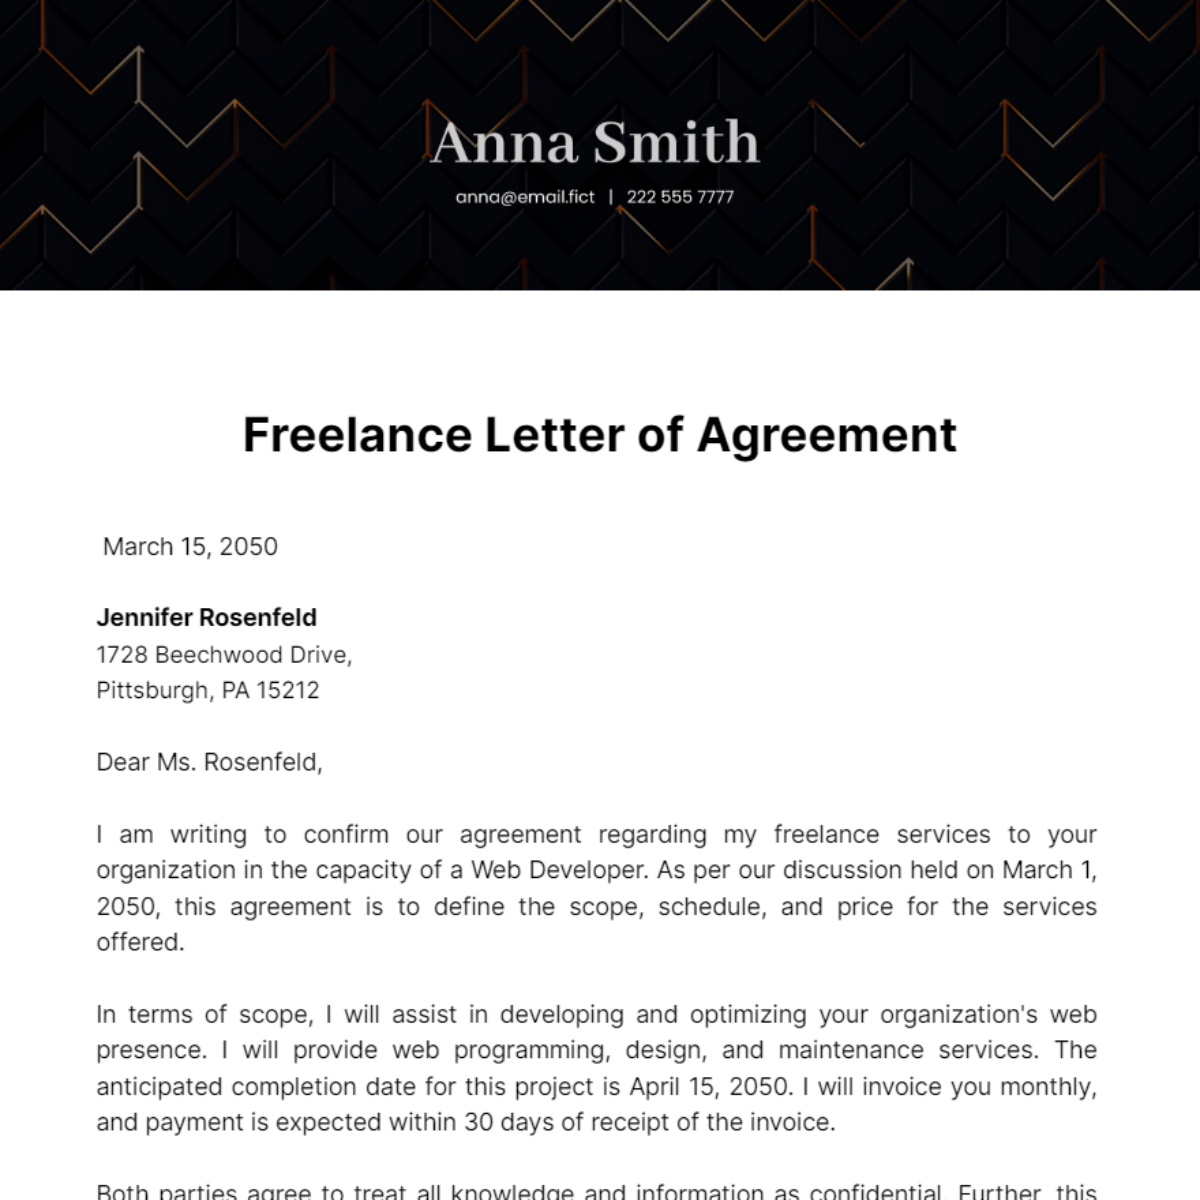 Freelance Letter of Agreement Template